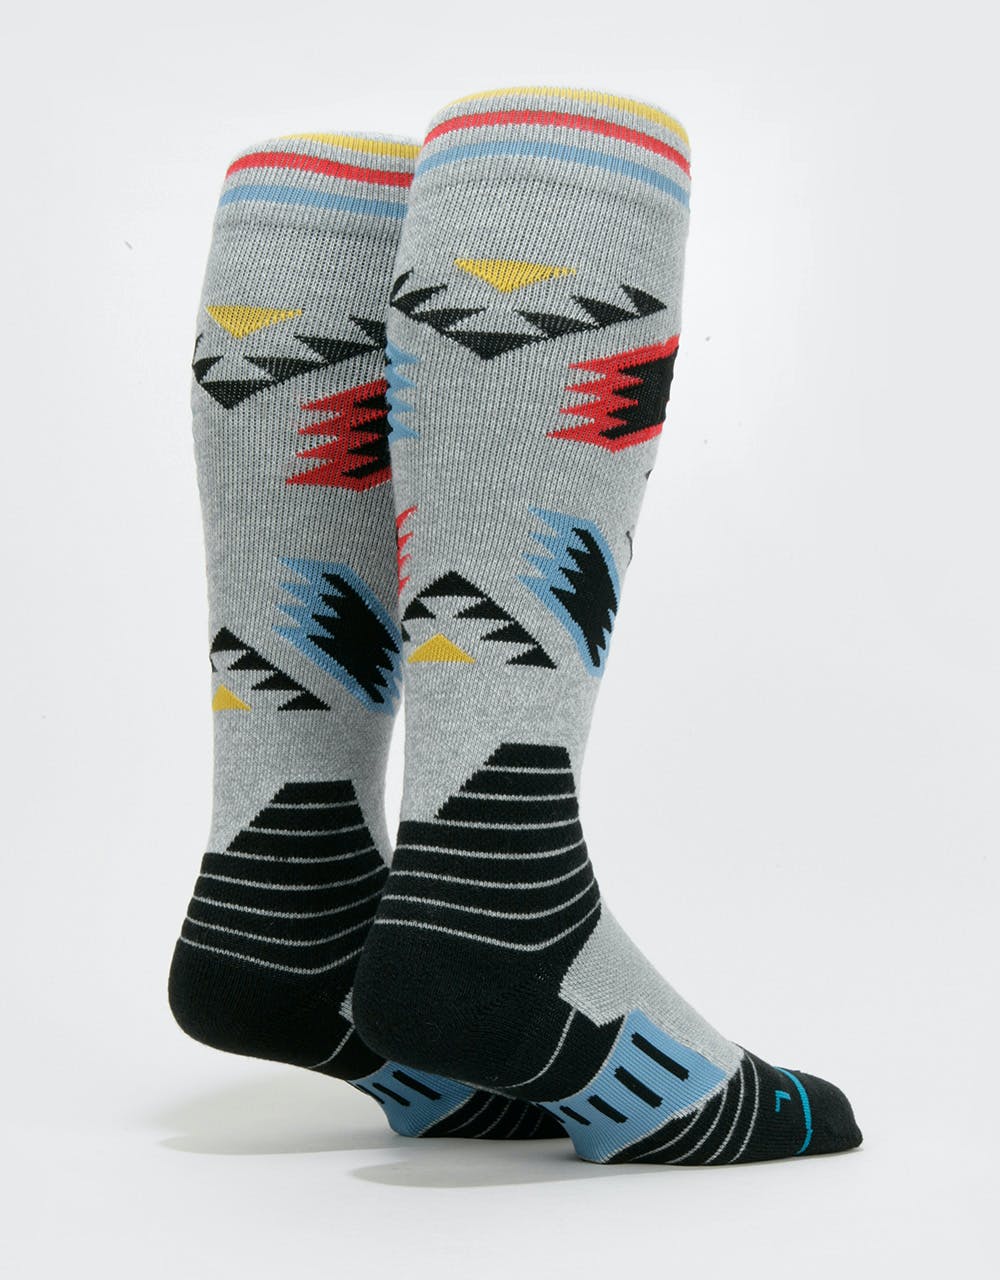 Stance Gonzaga Park Snowboard Socks - Grey